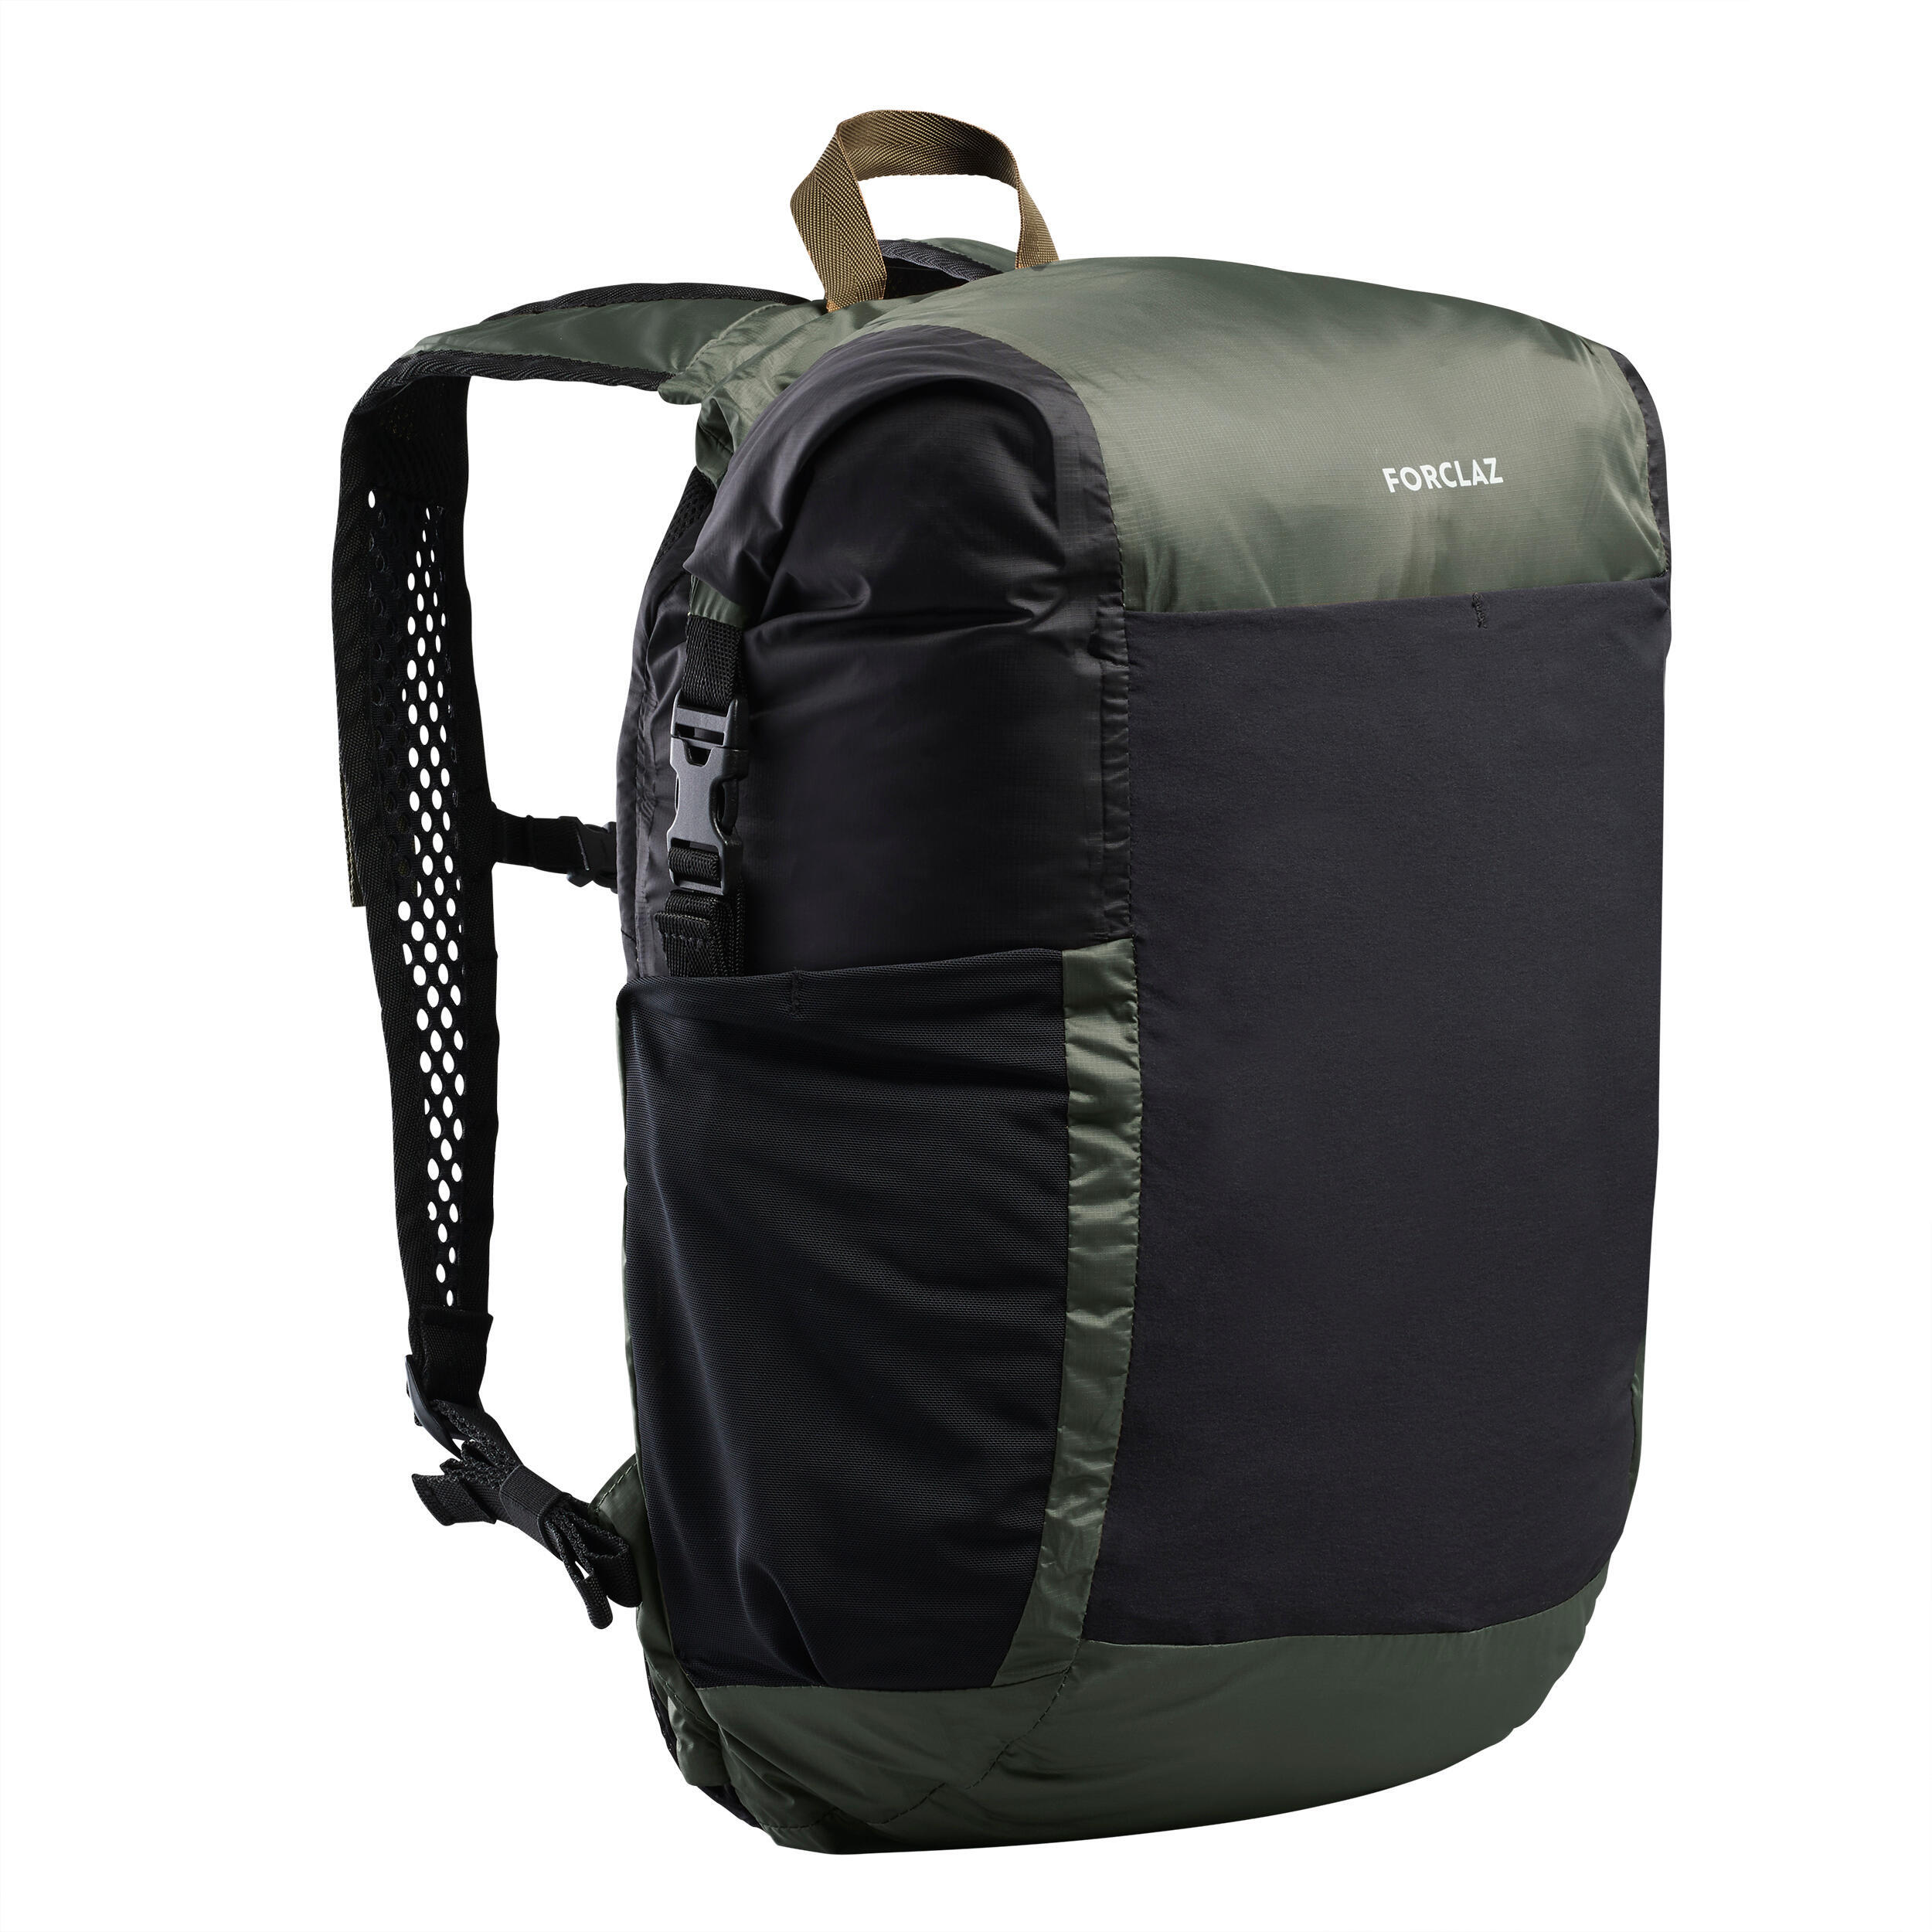 Waterproof foldable backpack 25L - Travel 4/11